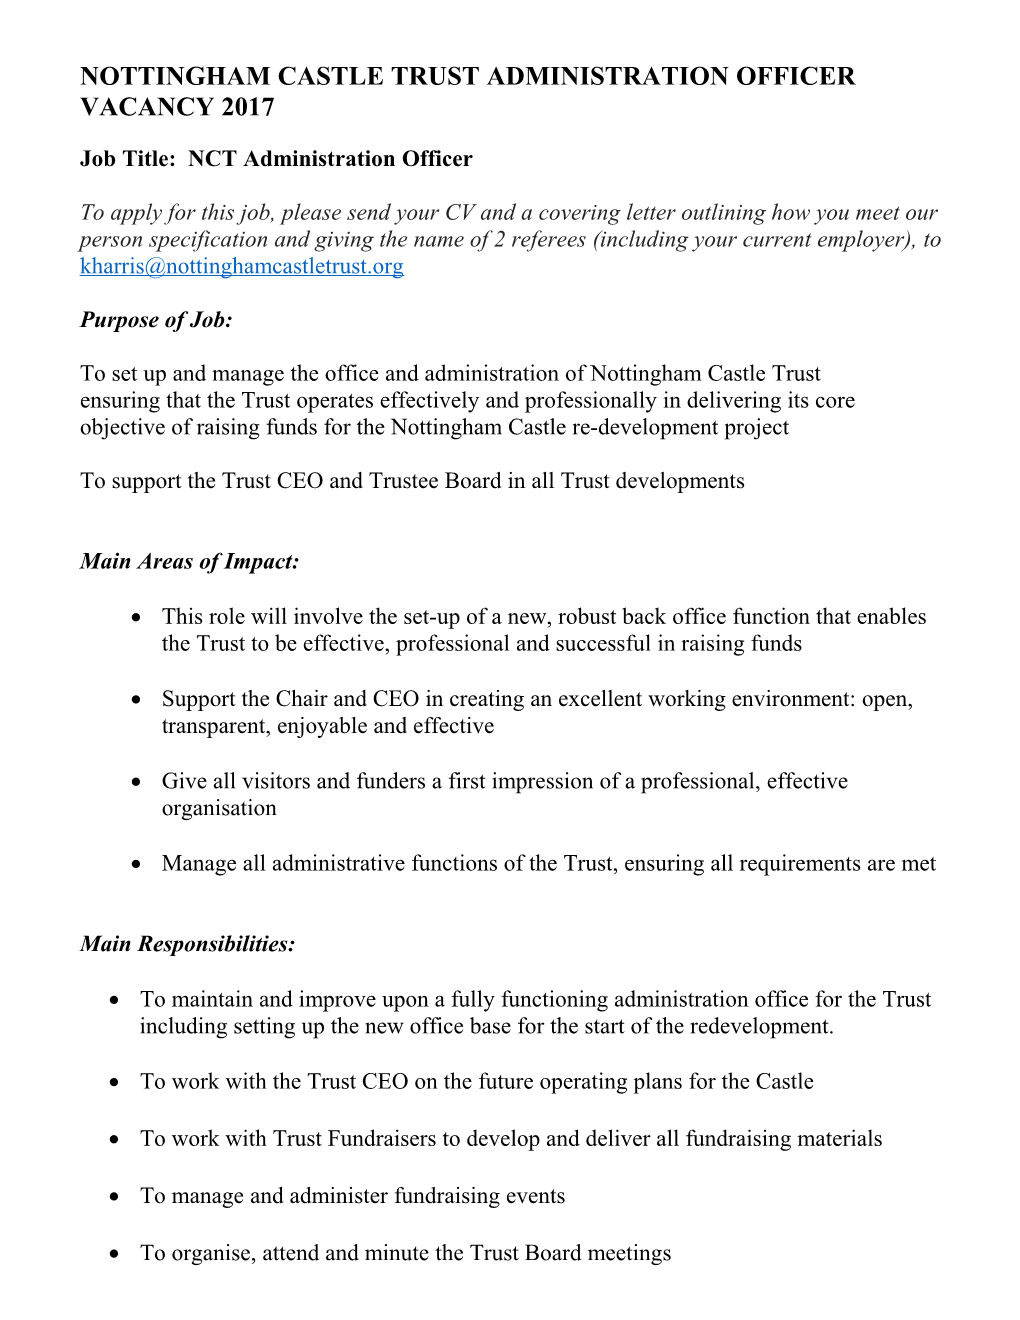 Nottingham Castle Trust Administration Officer Vacancy 2017